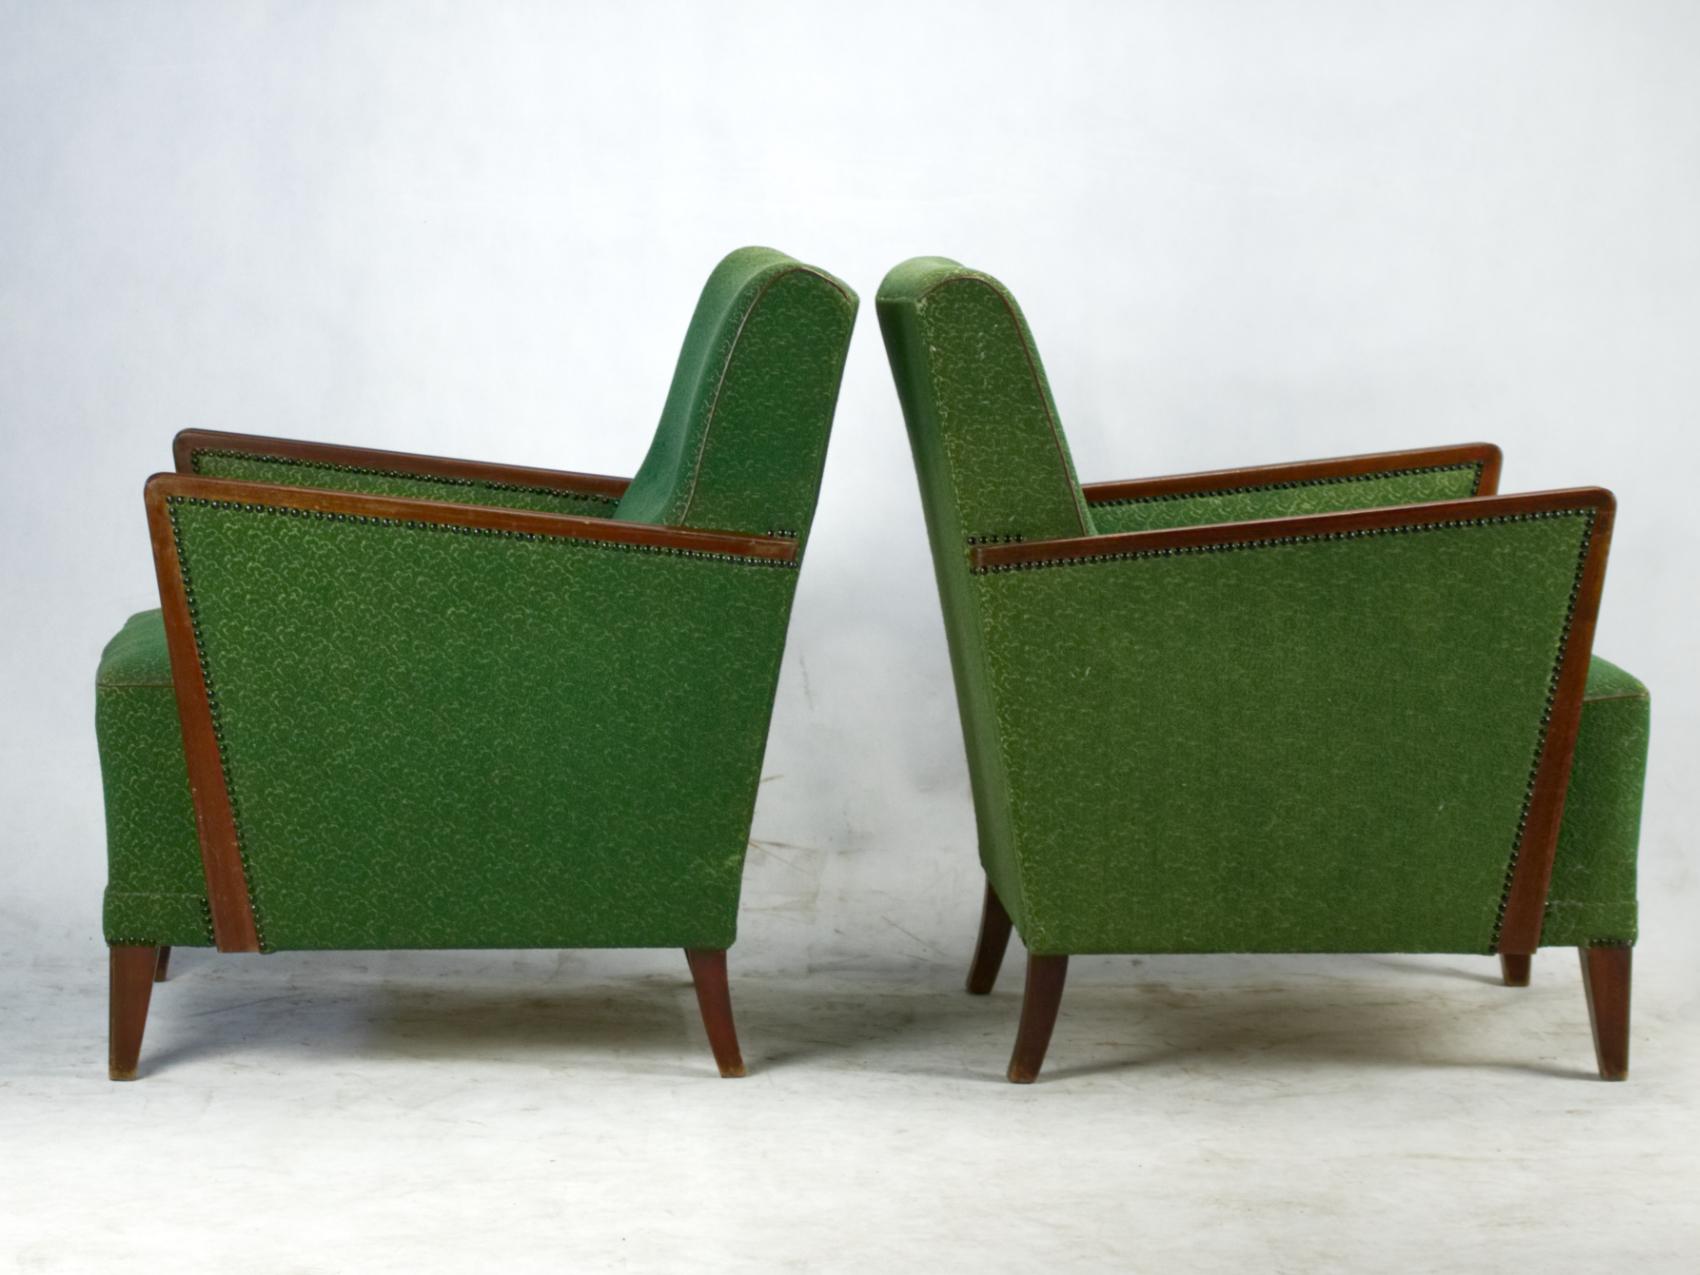 Pair of Art Deco armchairs in good original condition, circa 1930.